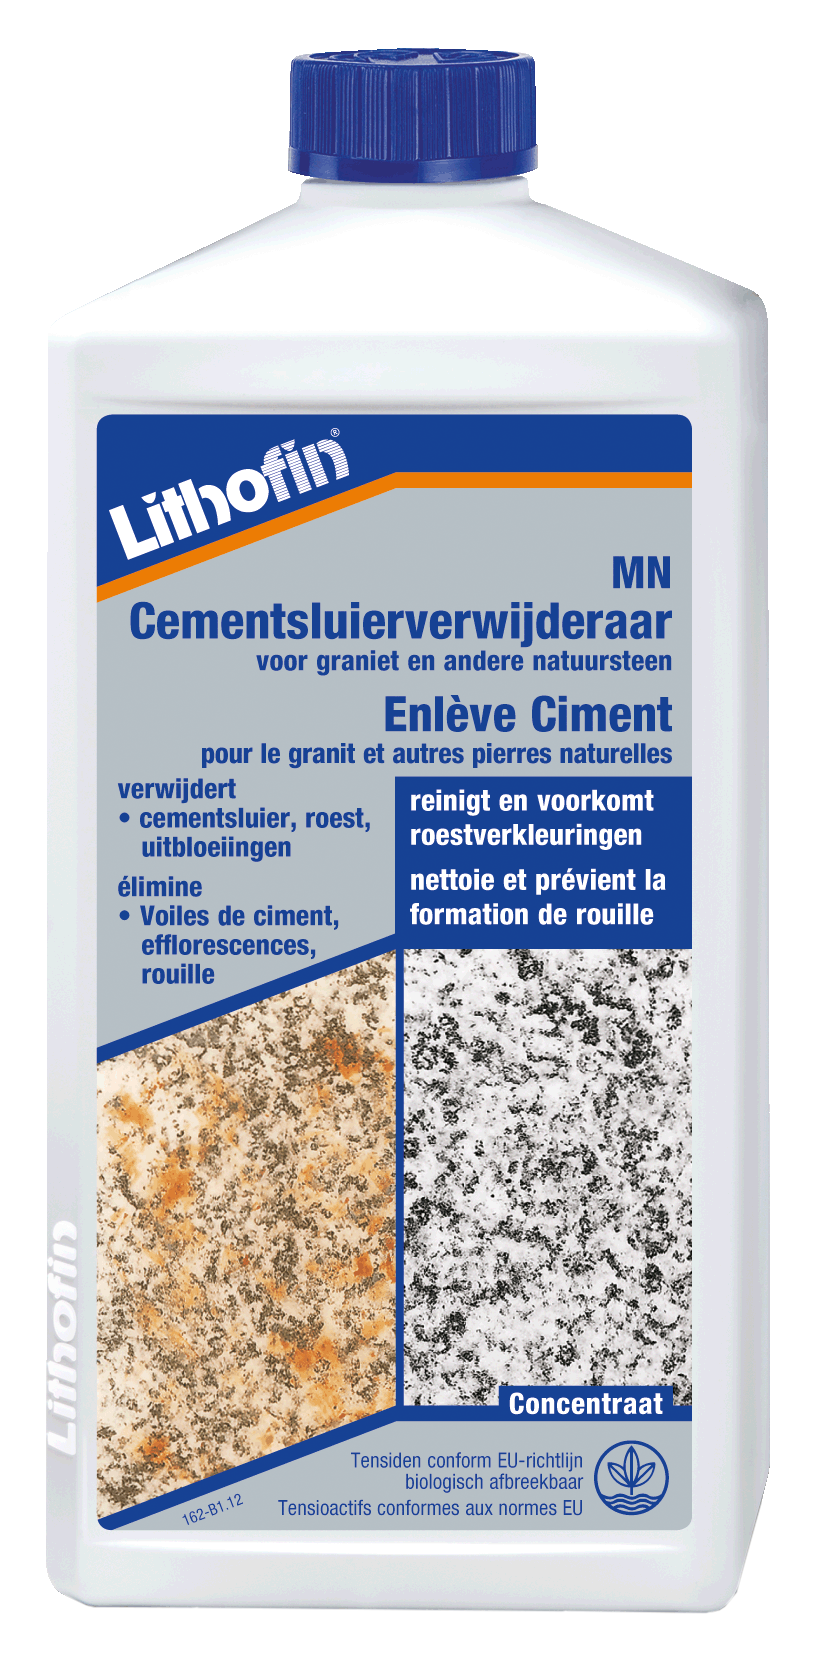 Lithofin MN Cementsluierverwijderaar 1 liter